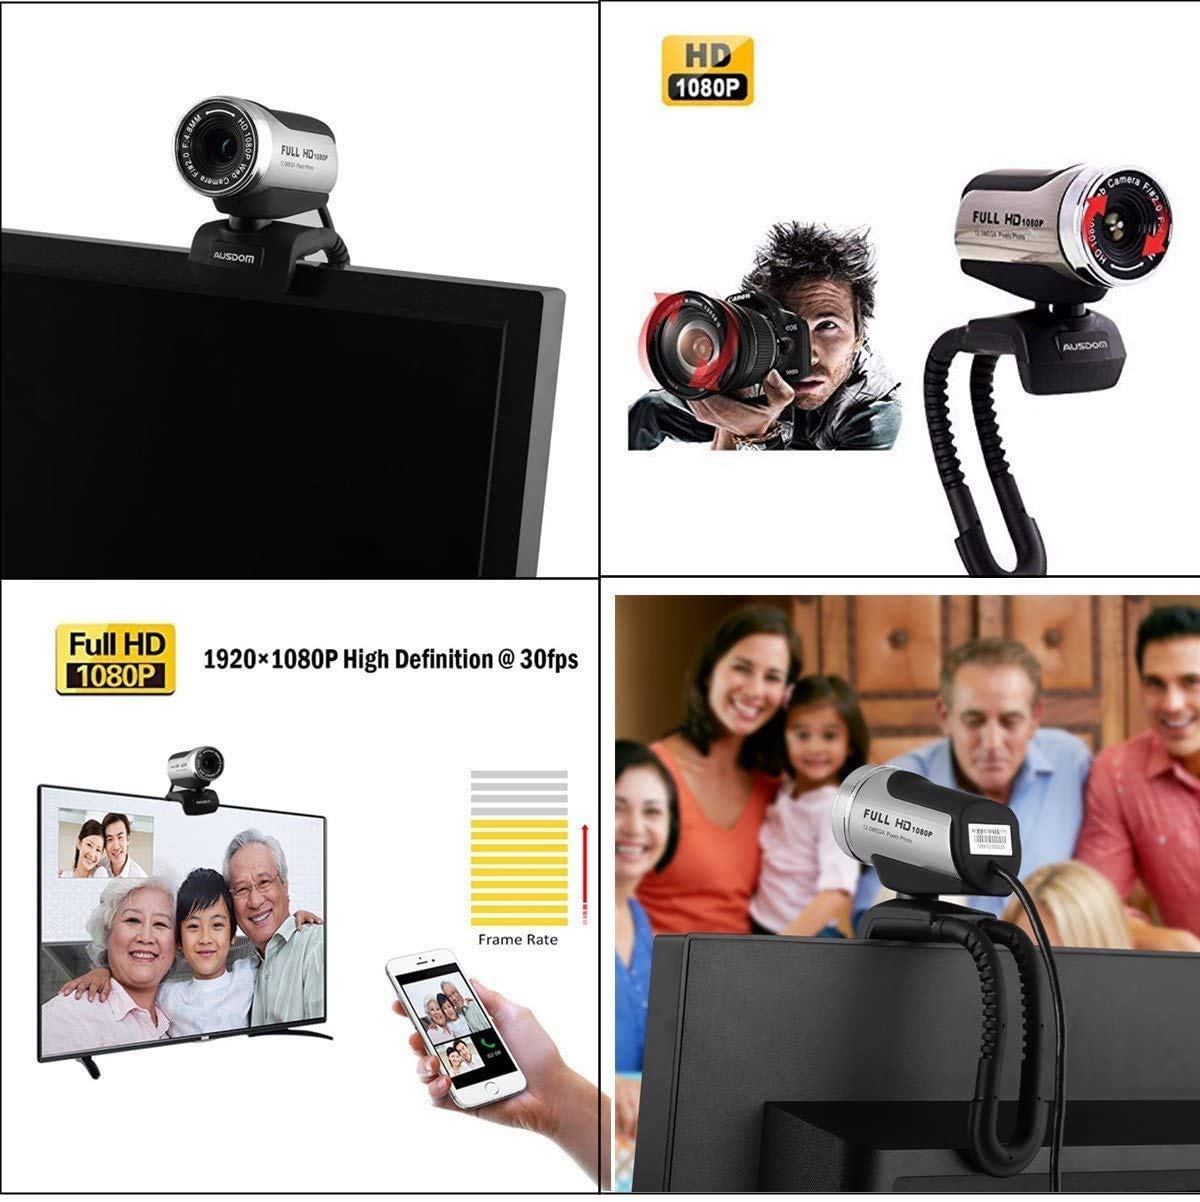 AUSDOM HD Webcam 1080P with Microphone, USB Desktop Laptop Web Camera 12.0MP, Auto Exposure, Pro Streaming Computer Camera for Laptop/Desktop/Skype/FaceTime/YouTube/Yahoo Messenger/Zoom